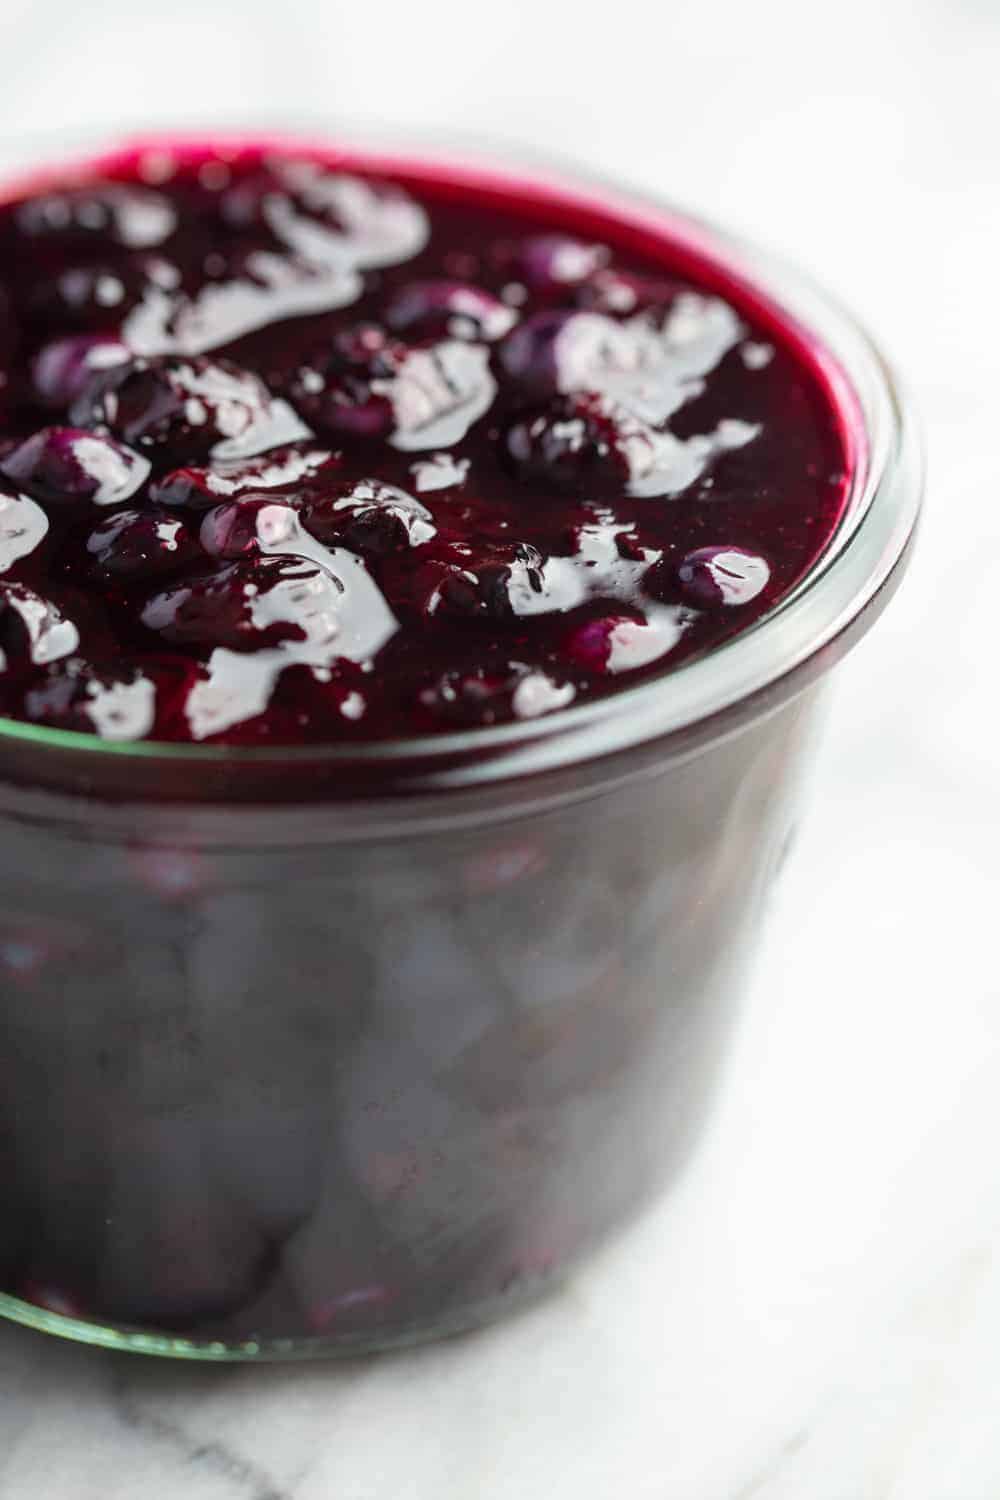 Homemade blueberry sauce in a glass jar